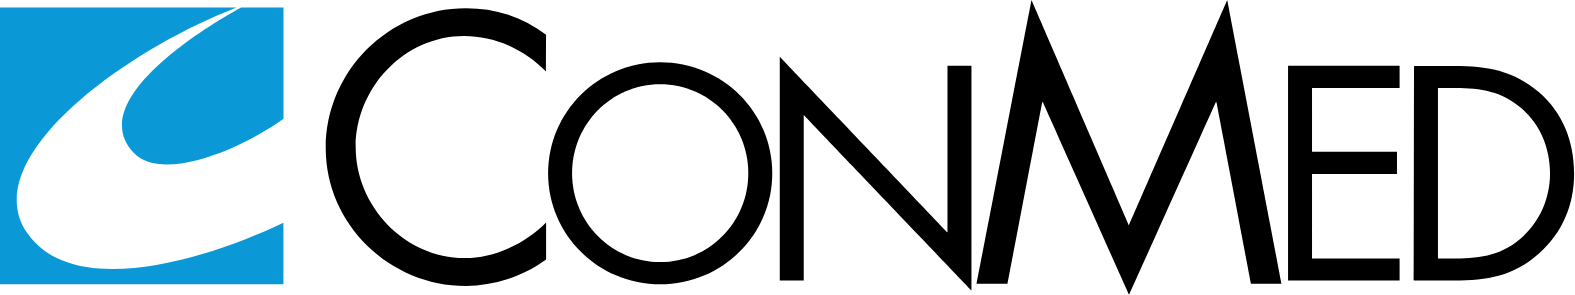 CONMED logo large (transparent PNG)